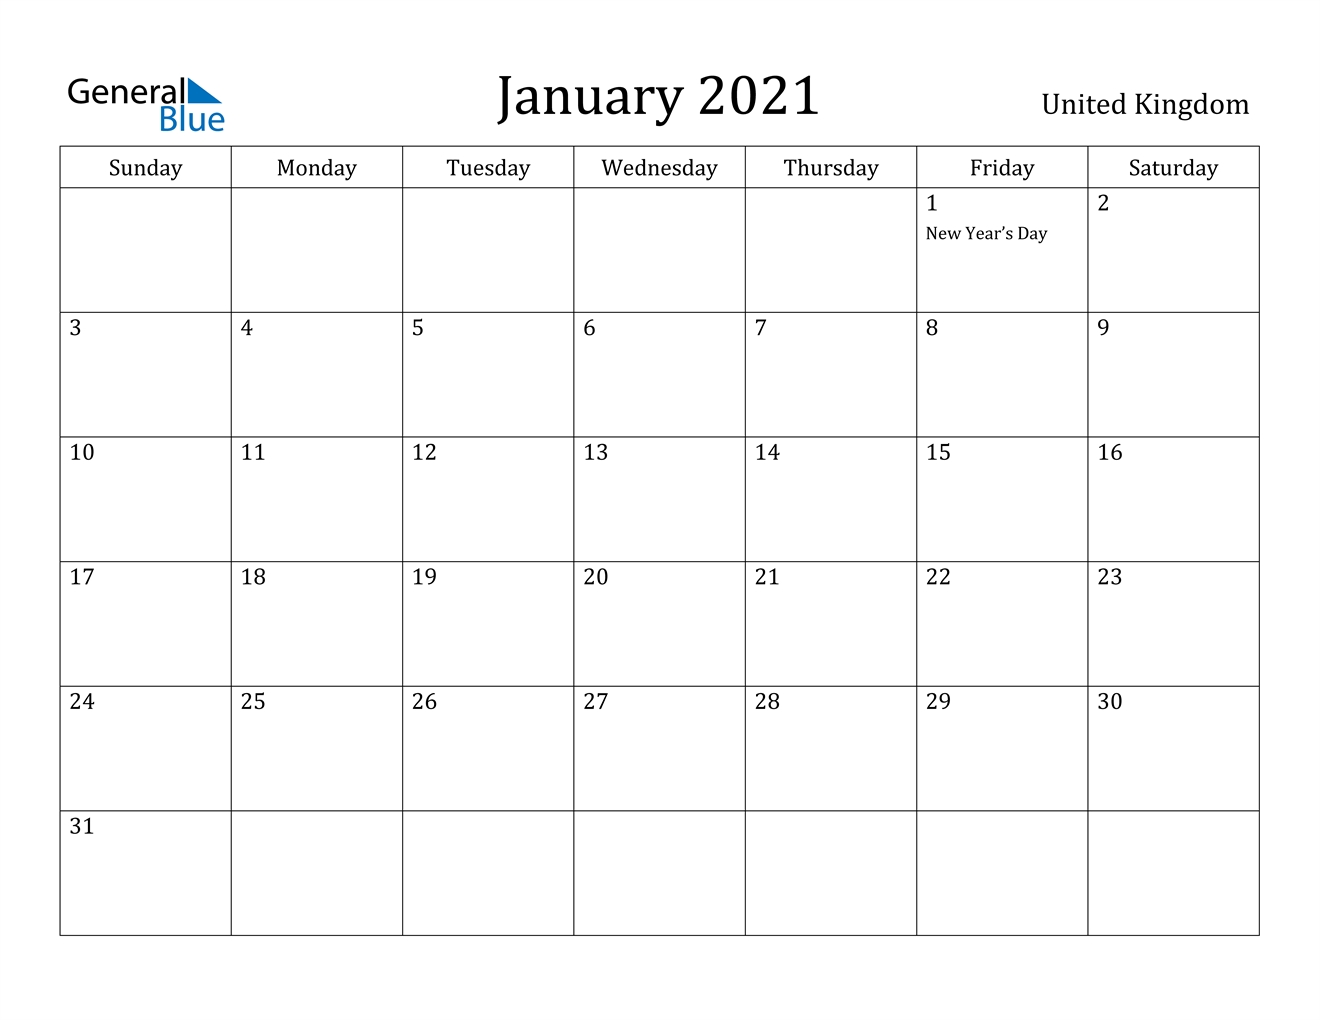 January 2021 Calendar - United Kingdom Free Uk Calendar Templates